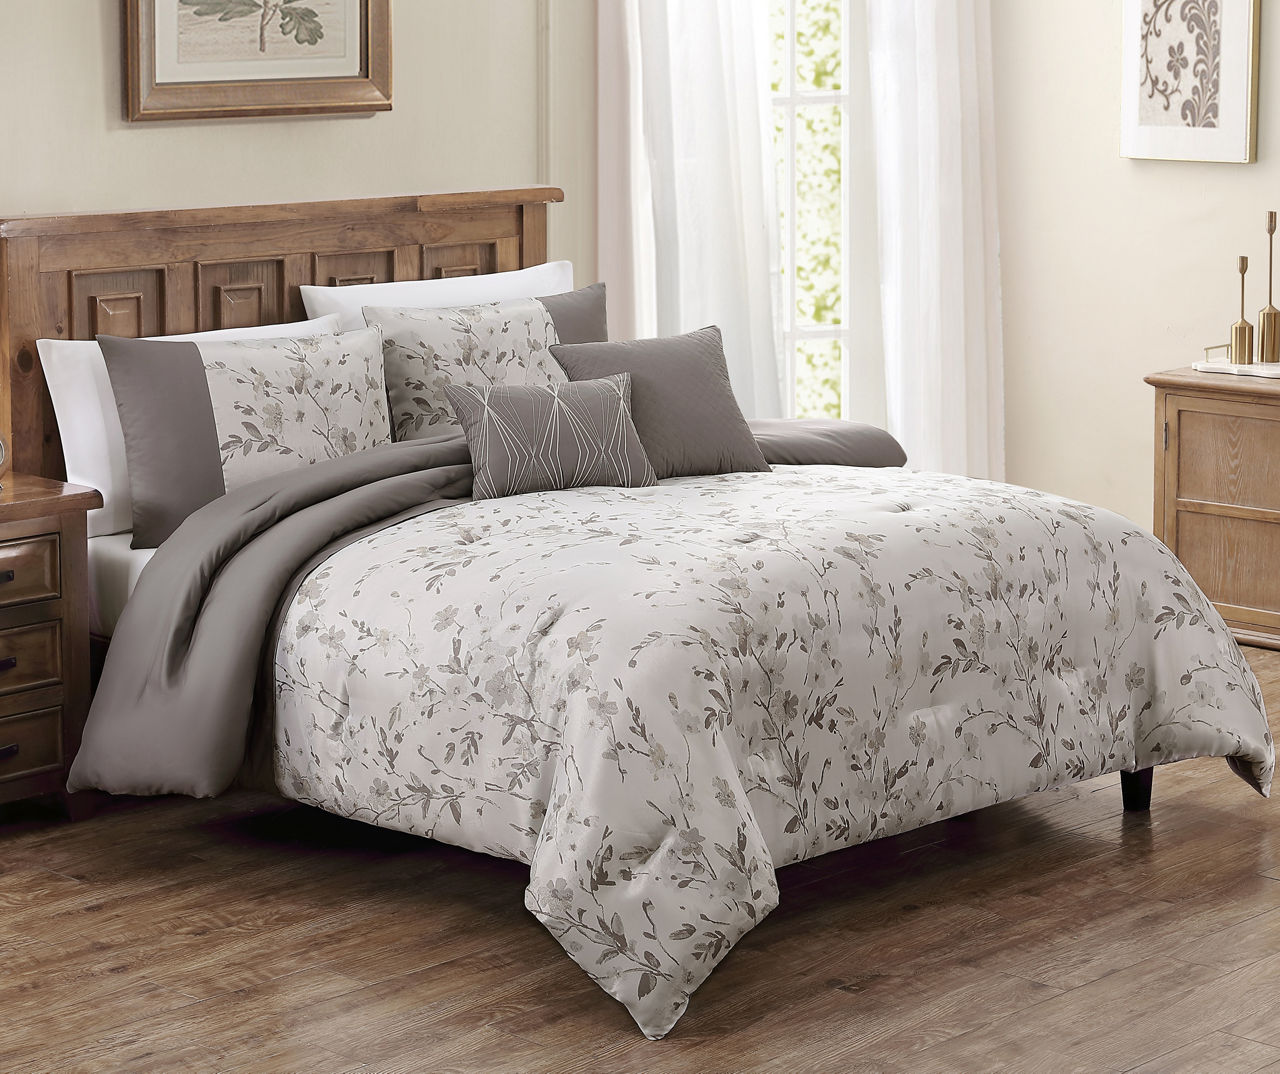 Broyhill Broyhill Coogan Gray & White Leaf Print Comforter Set | Big Lots